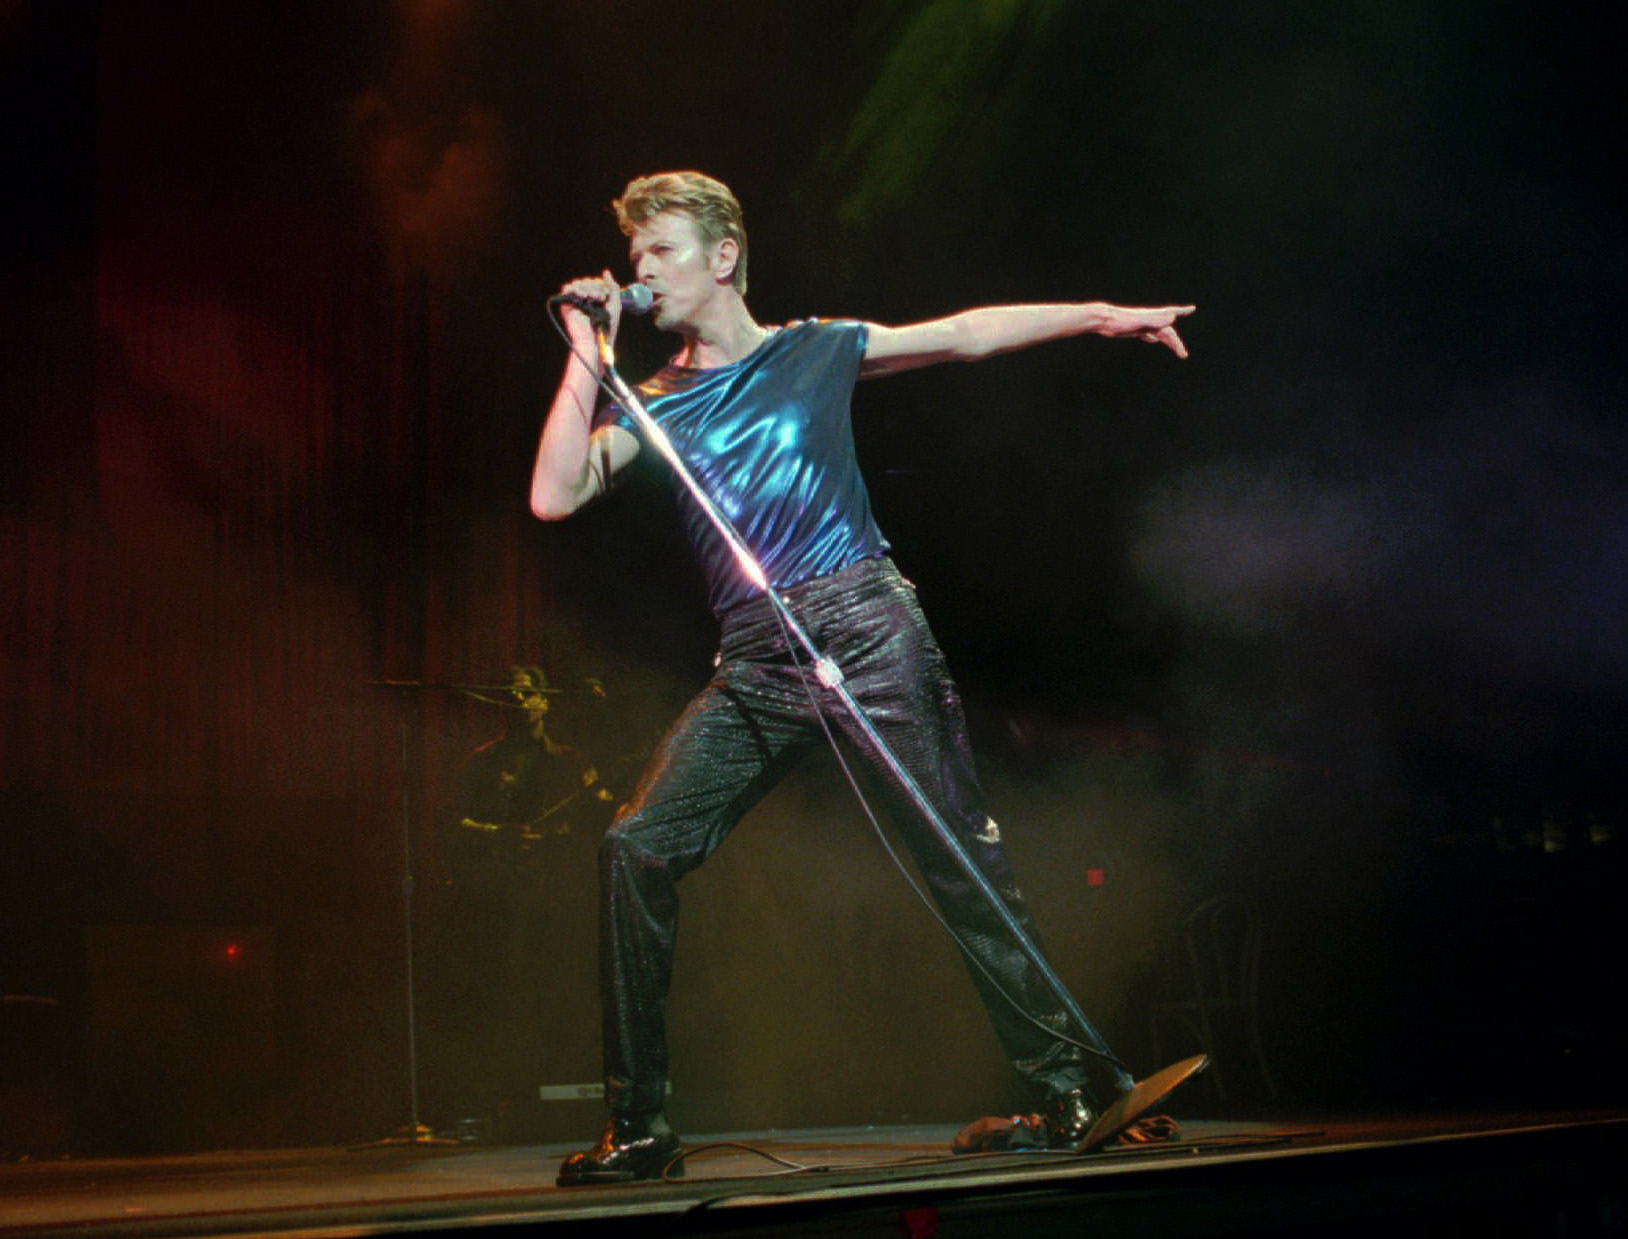 David Bowie: 1947 — 2016